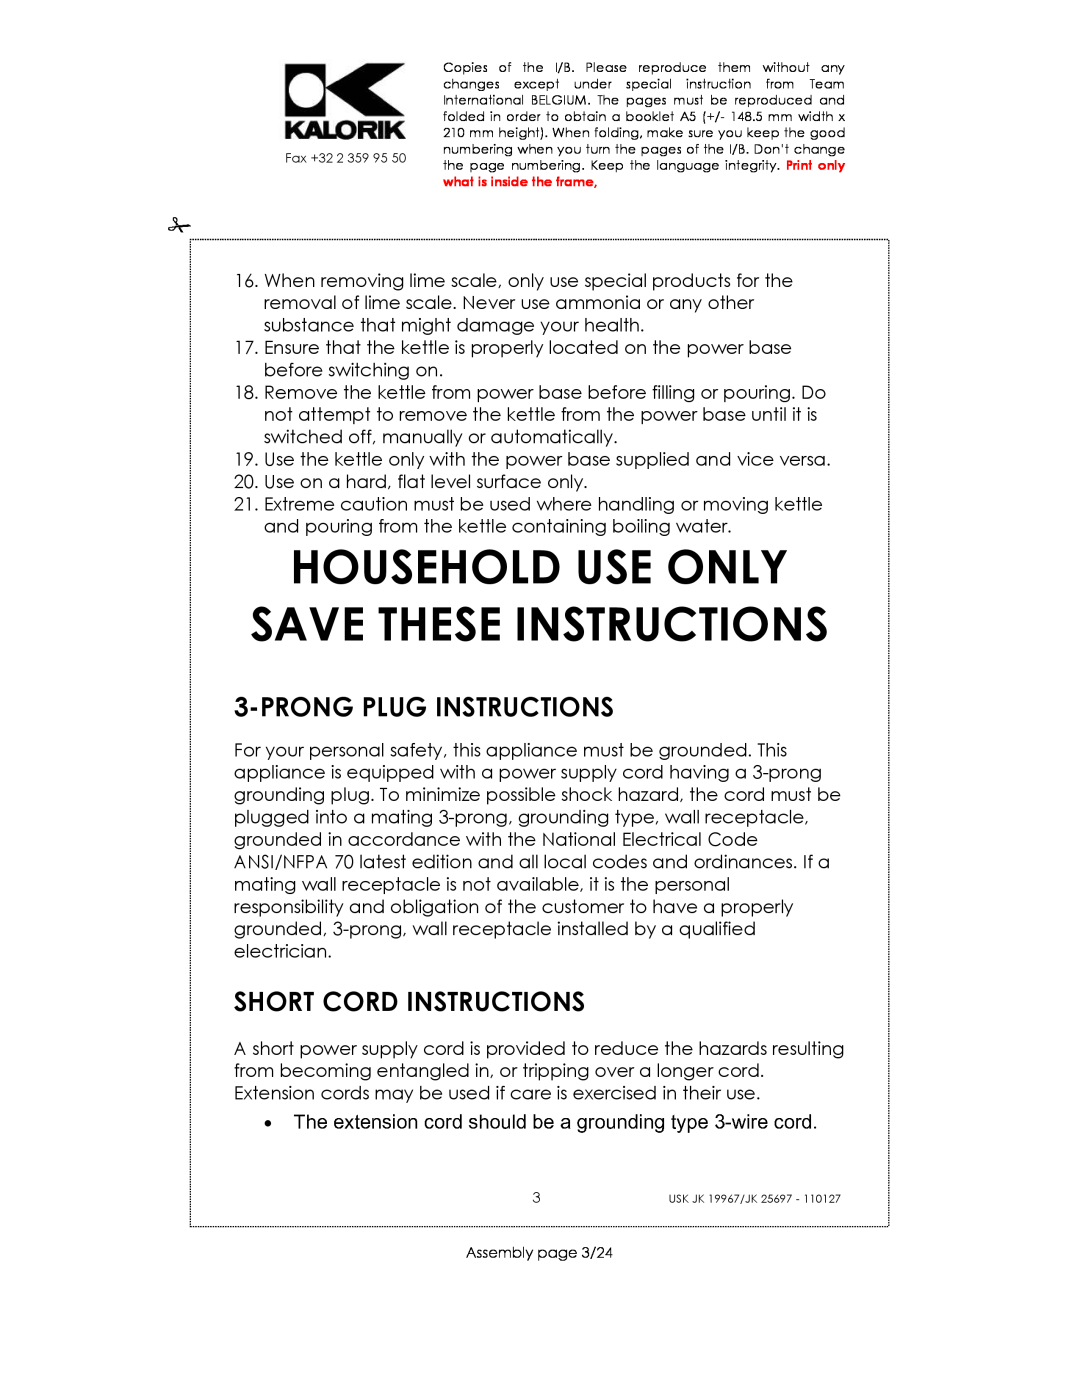 Kalorik JK 25697, JK 19967 Household Use Only Save These Instructions, Prong Plug Instructions, Short Cord Instructions 